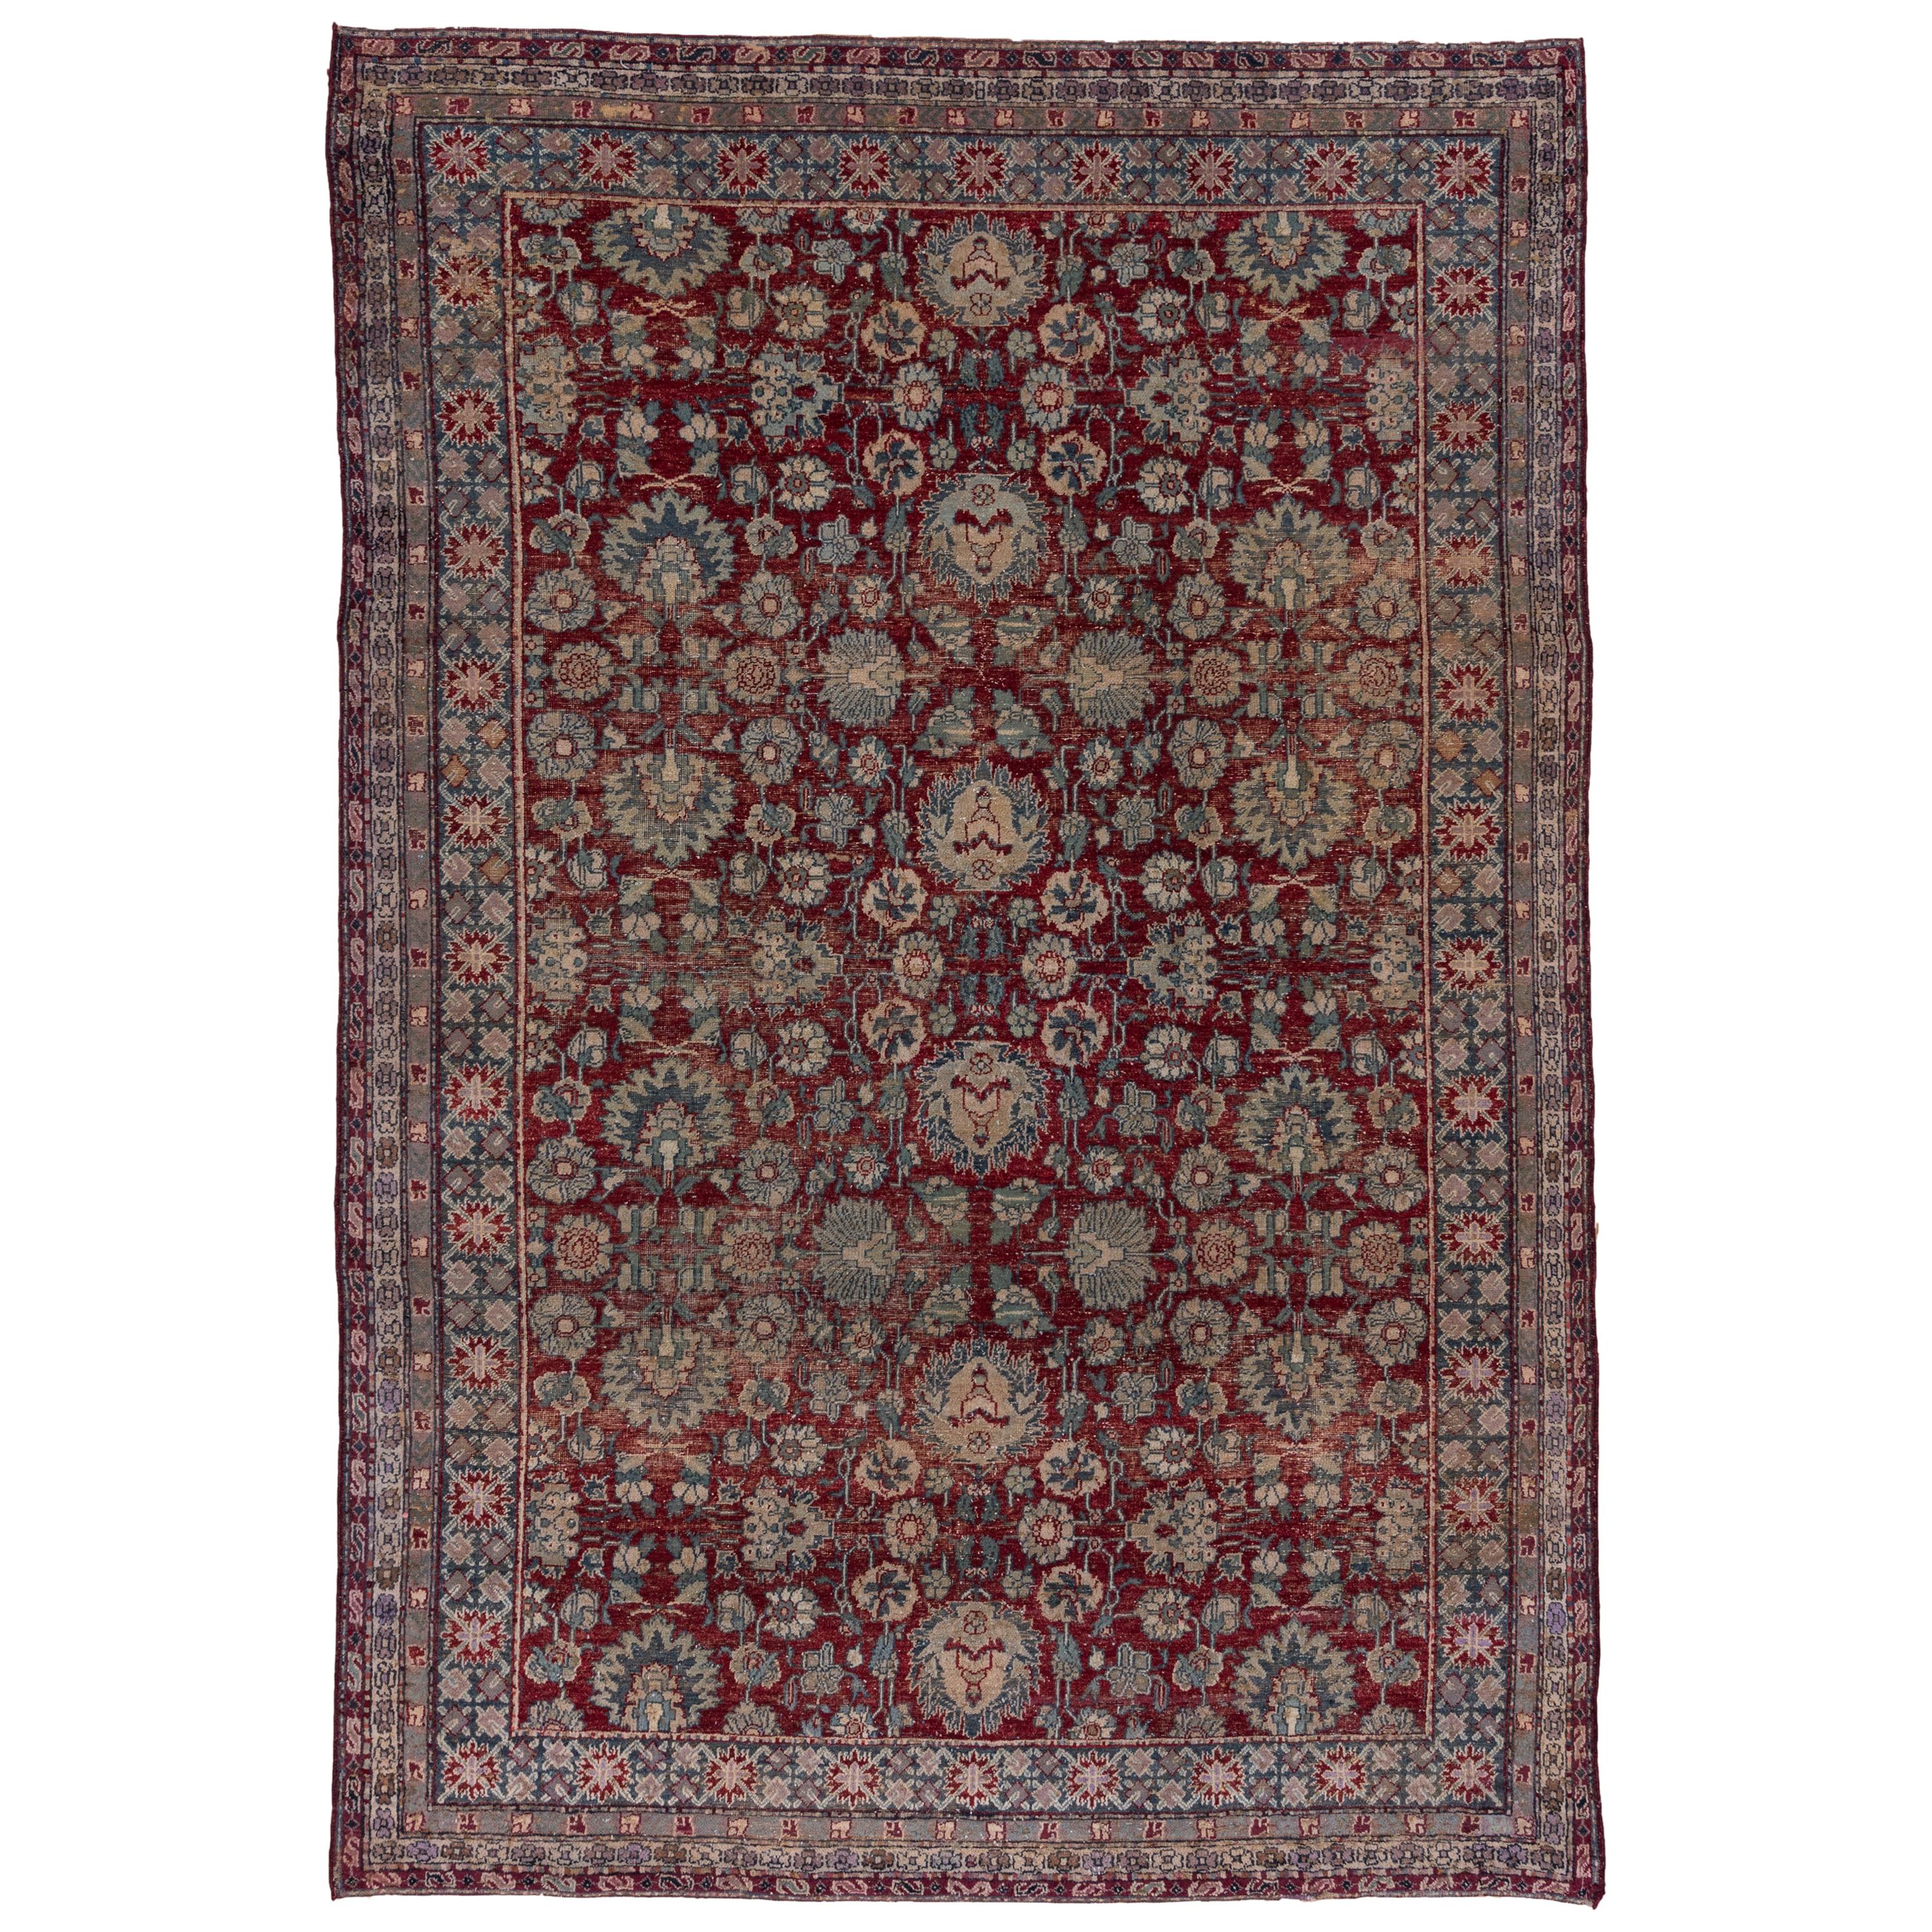 Indian Agra Carpet, Burgundy Field